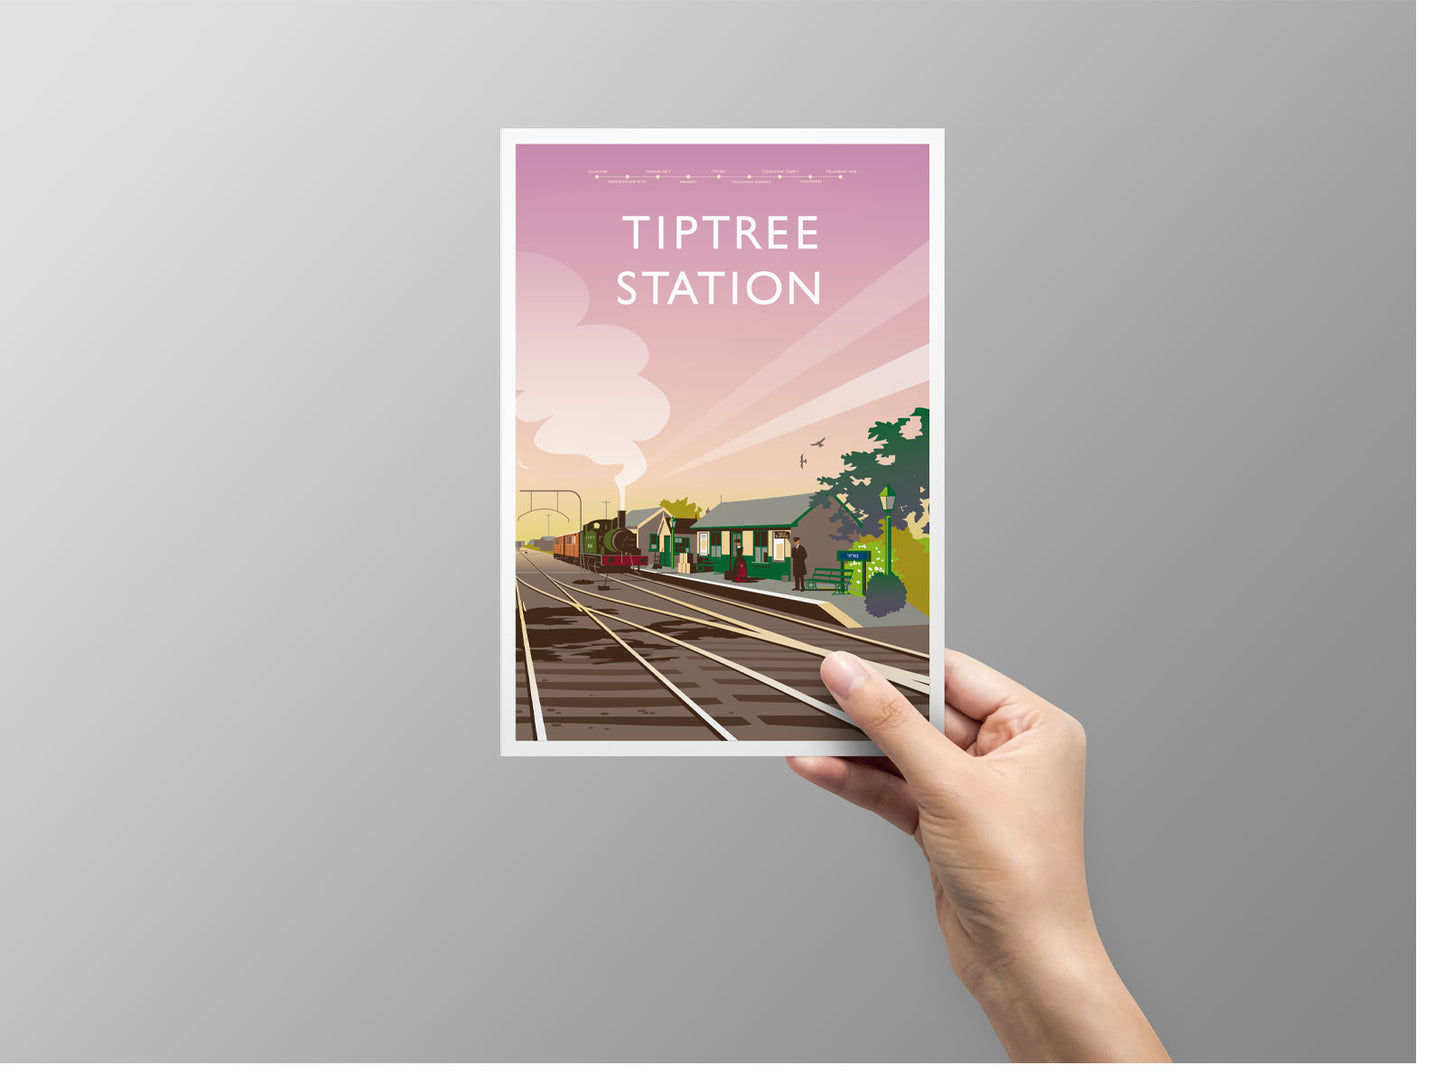 Tiptree, Essex Greeting Card